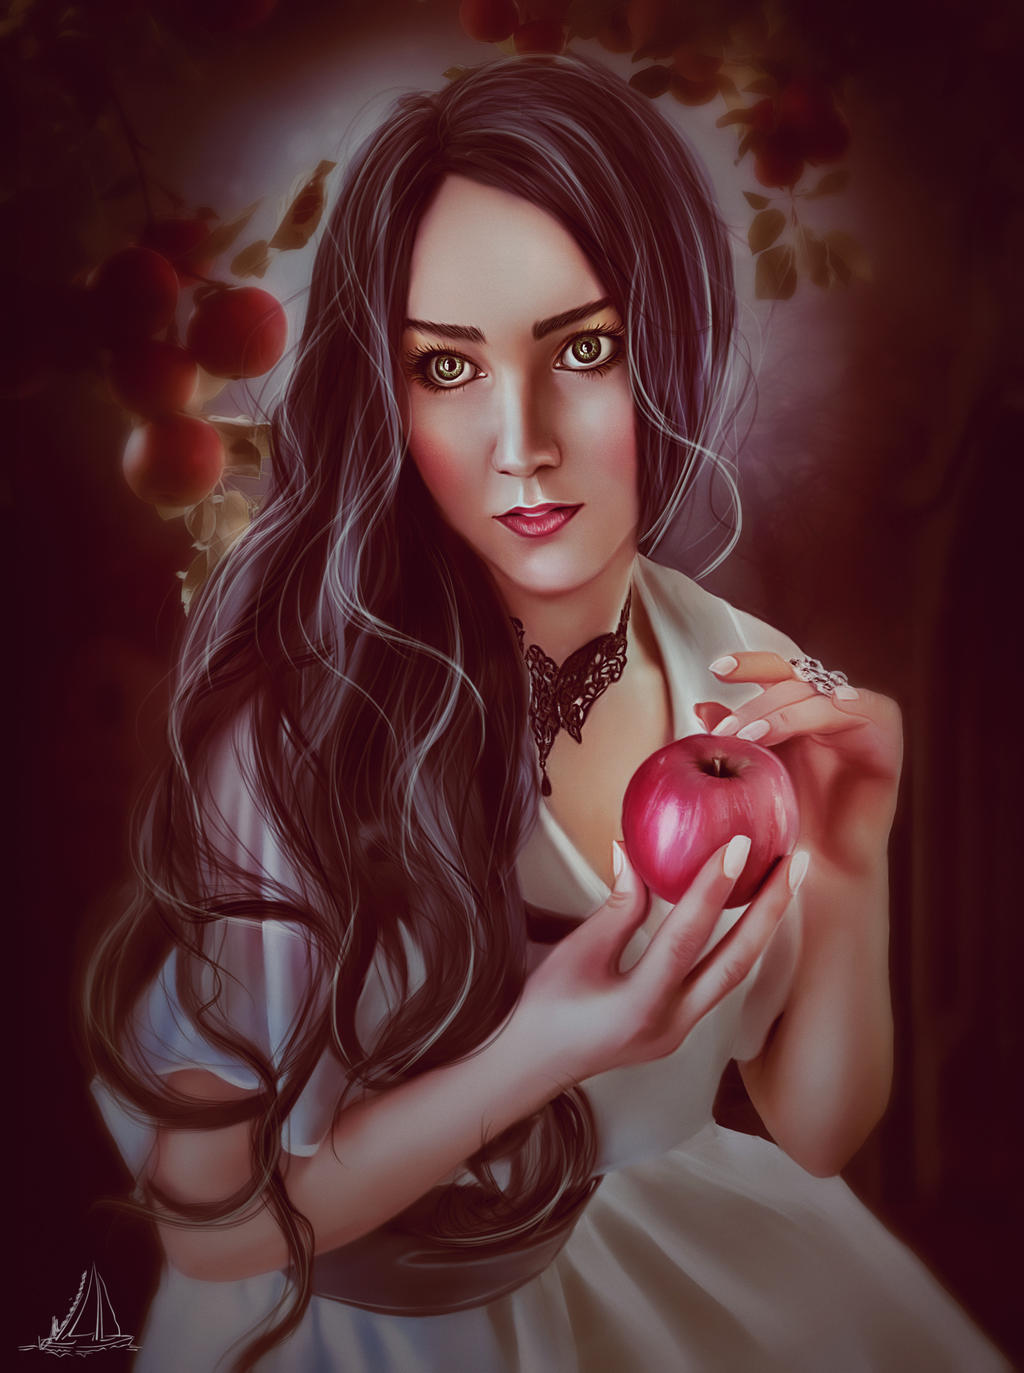 Snow White 4 by FrostAlexis on DeviantArt